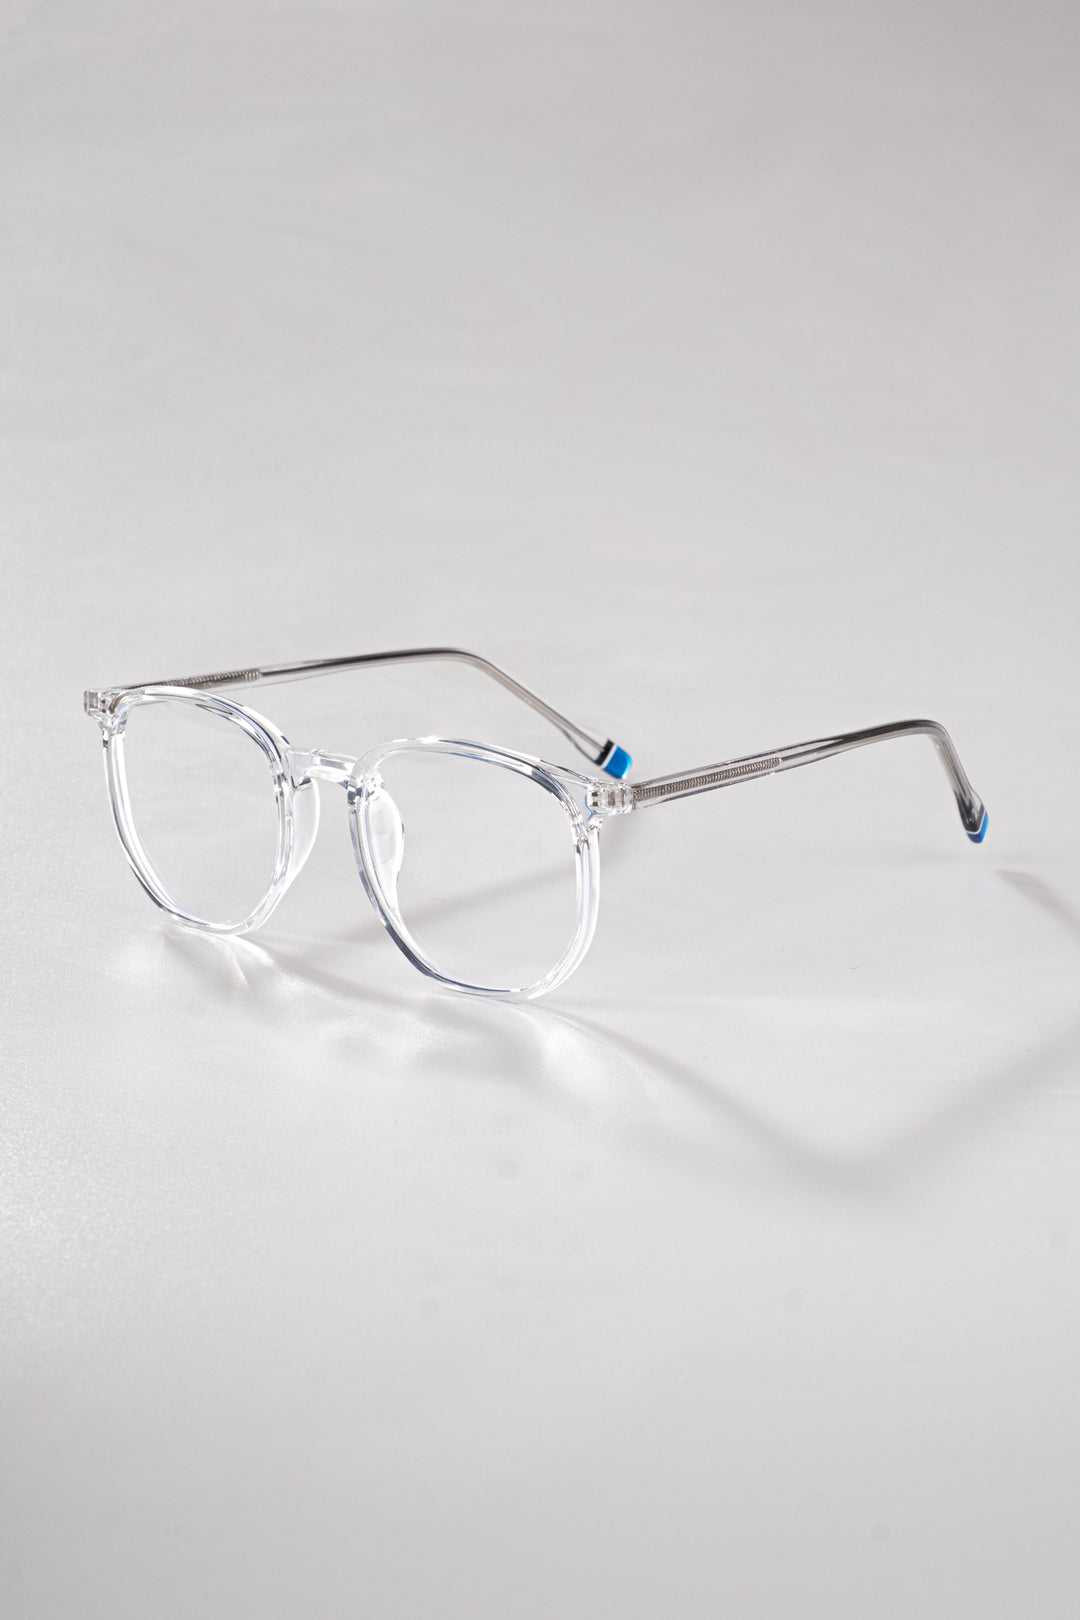 Matruj Blue Light Protection Glasses